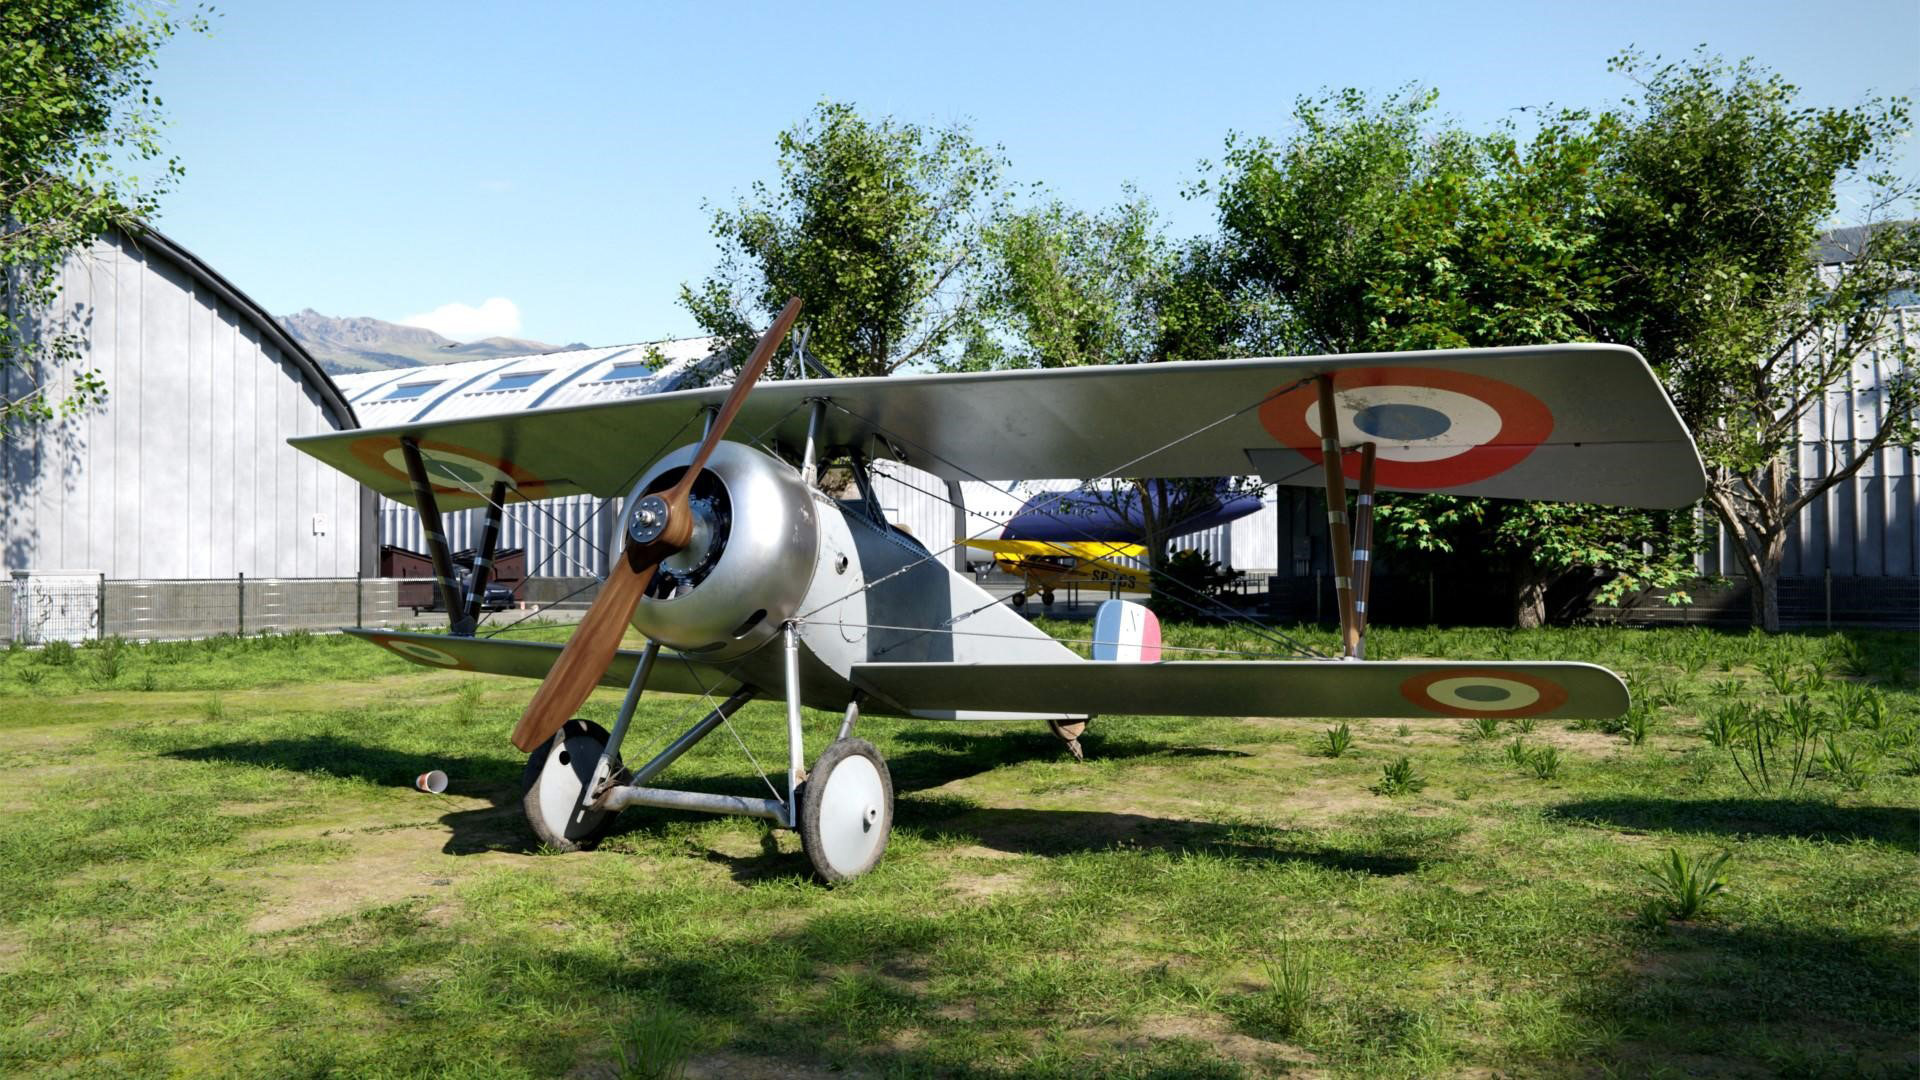 Nieuport 17 biplane